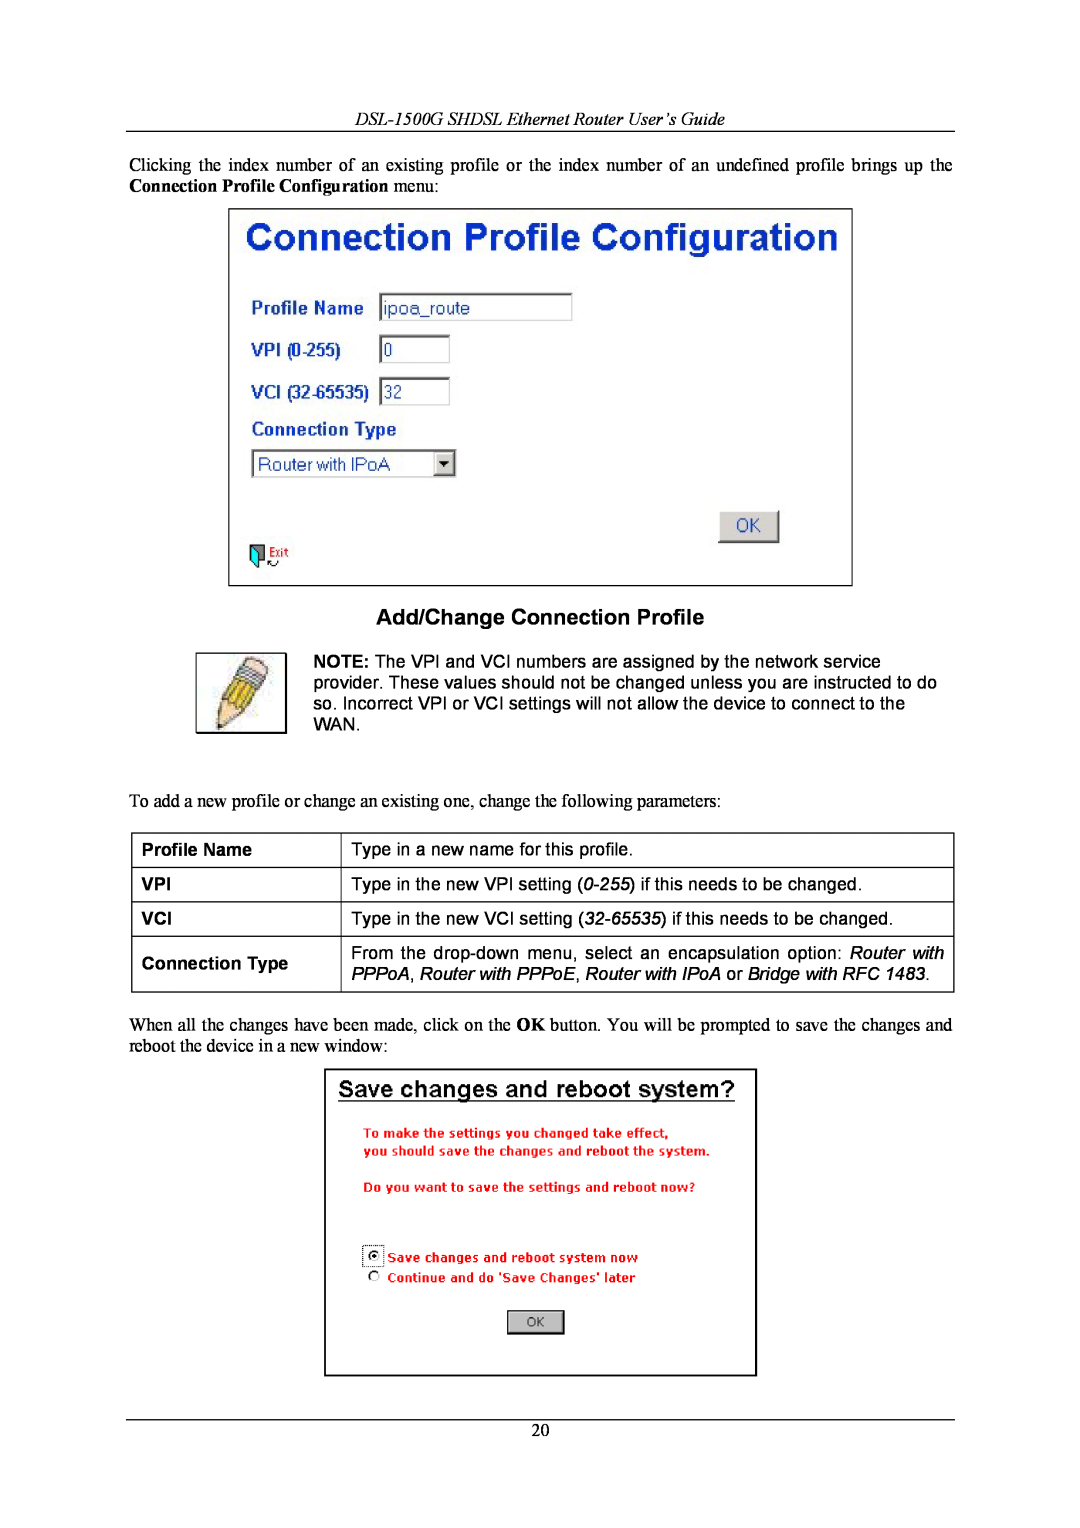 D-Link manual Add/Change Connection Profile, DSL-1500G SHDSL Ethernet Router User’s Guide 